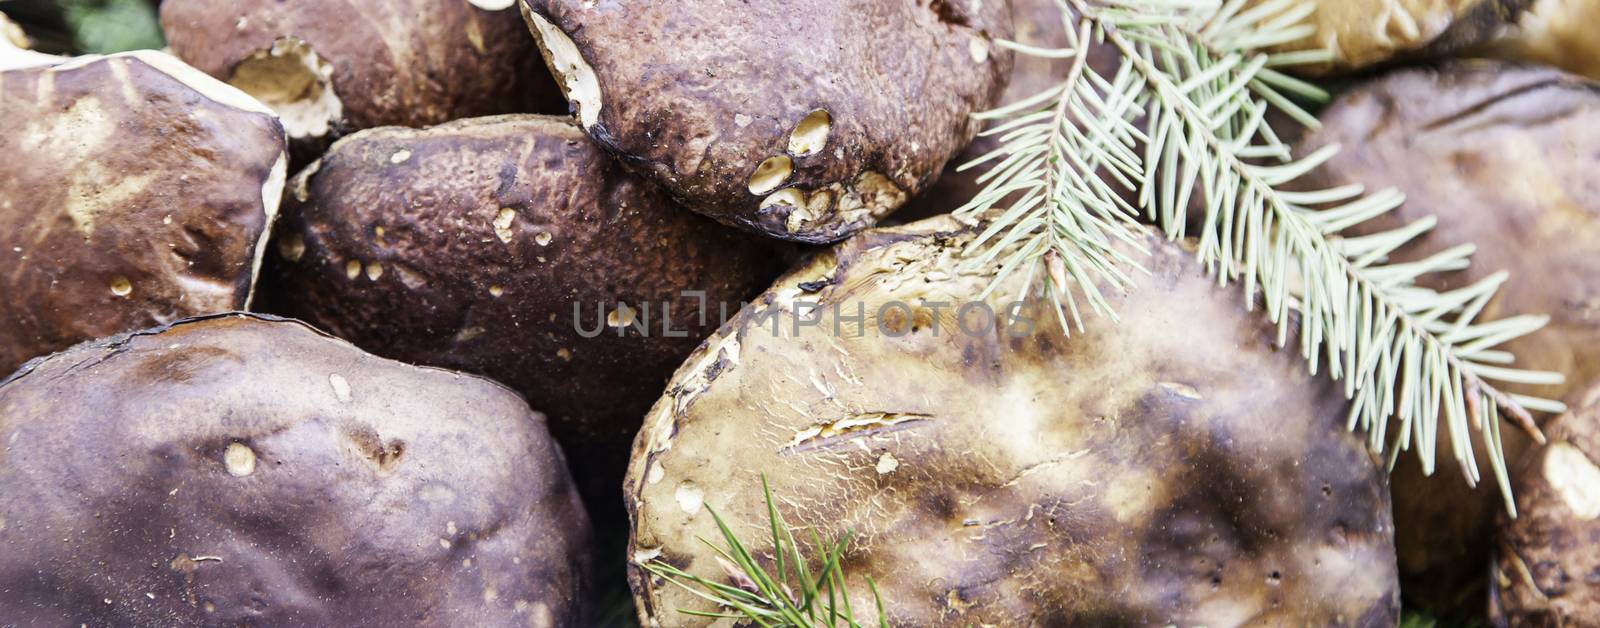 Mount mushrooms by esebene